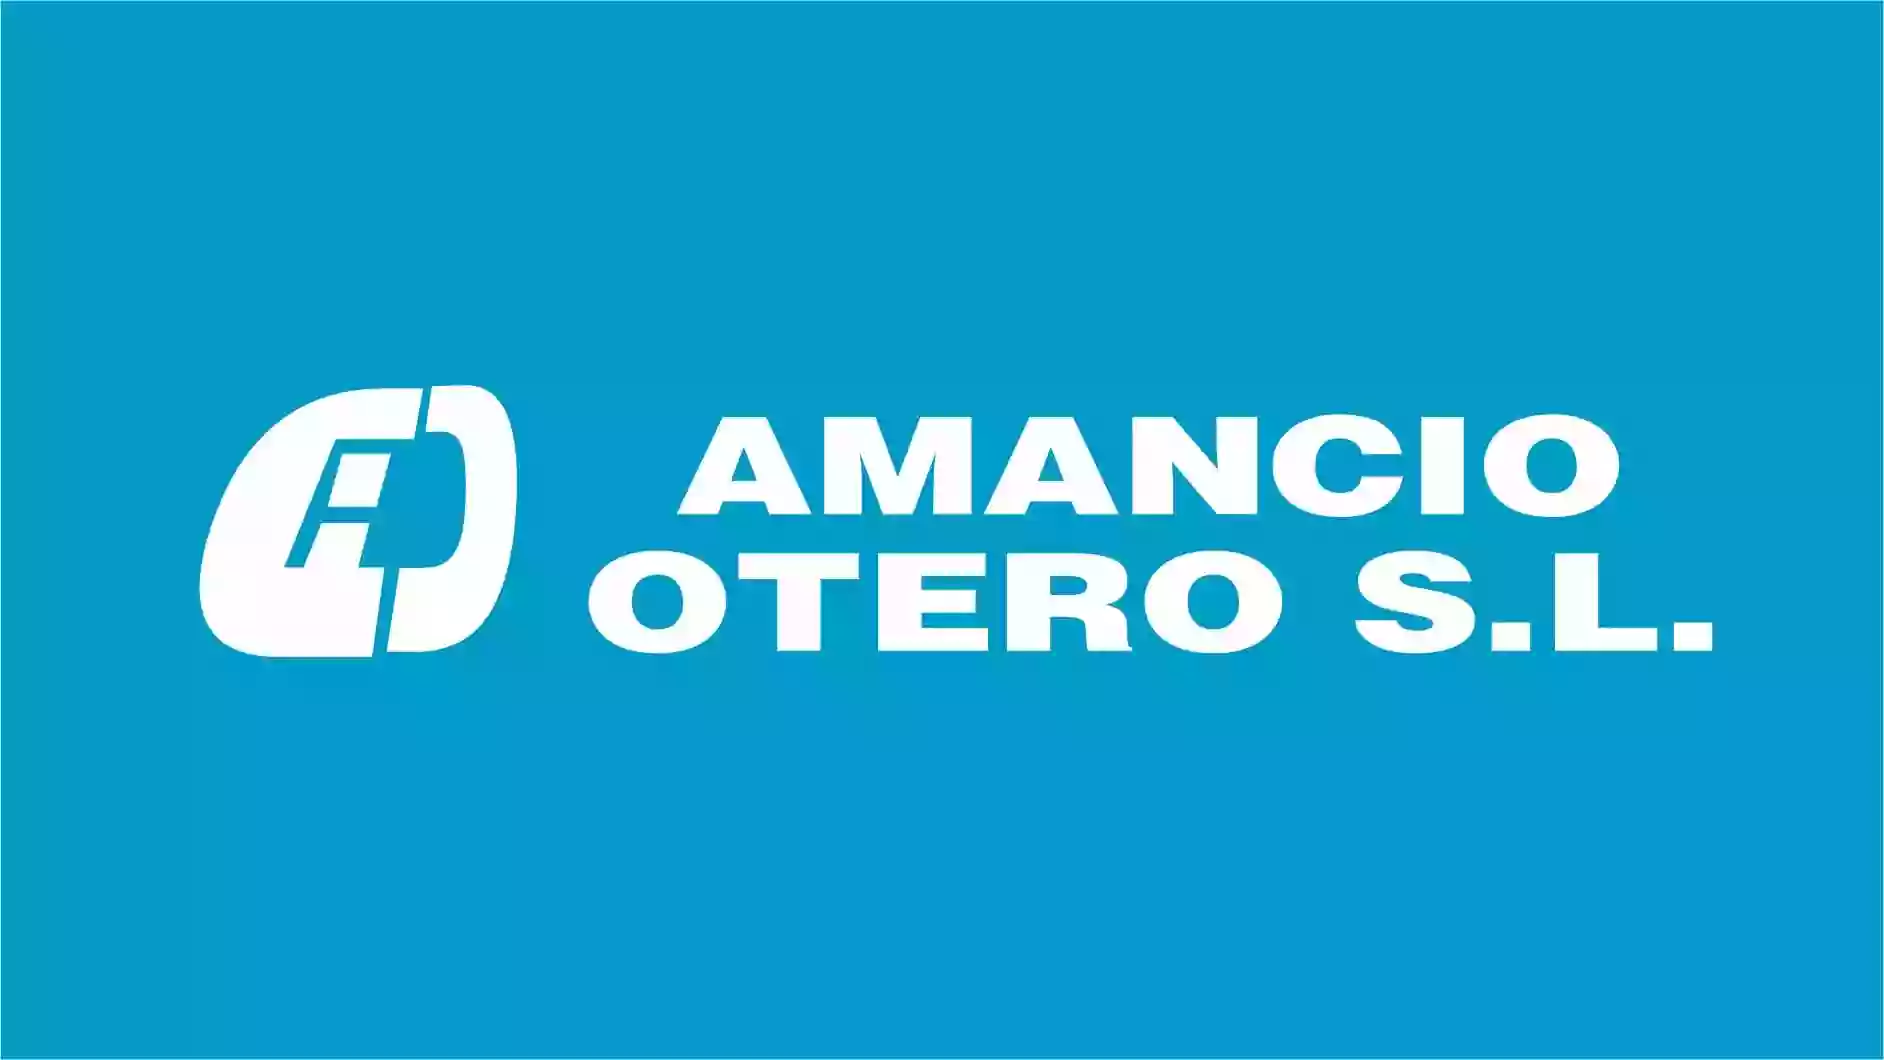 Amancio Otero